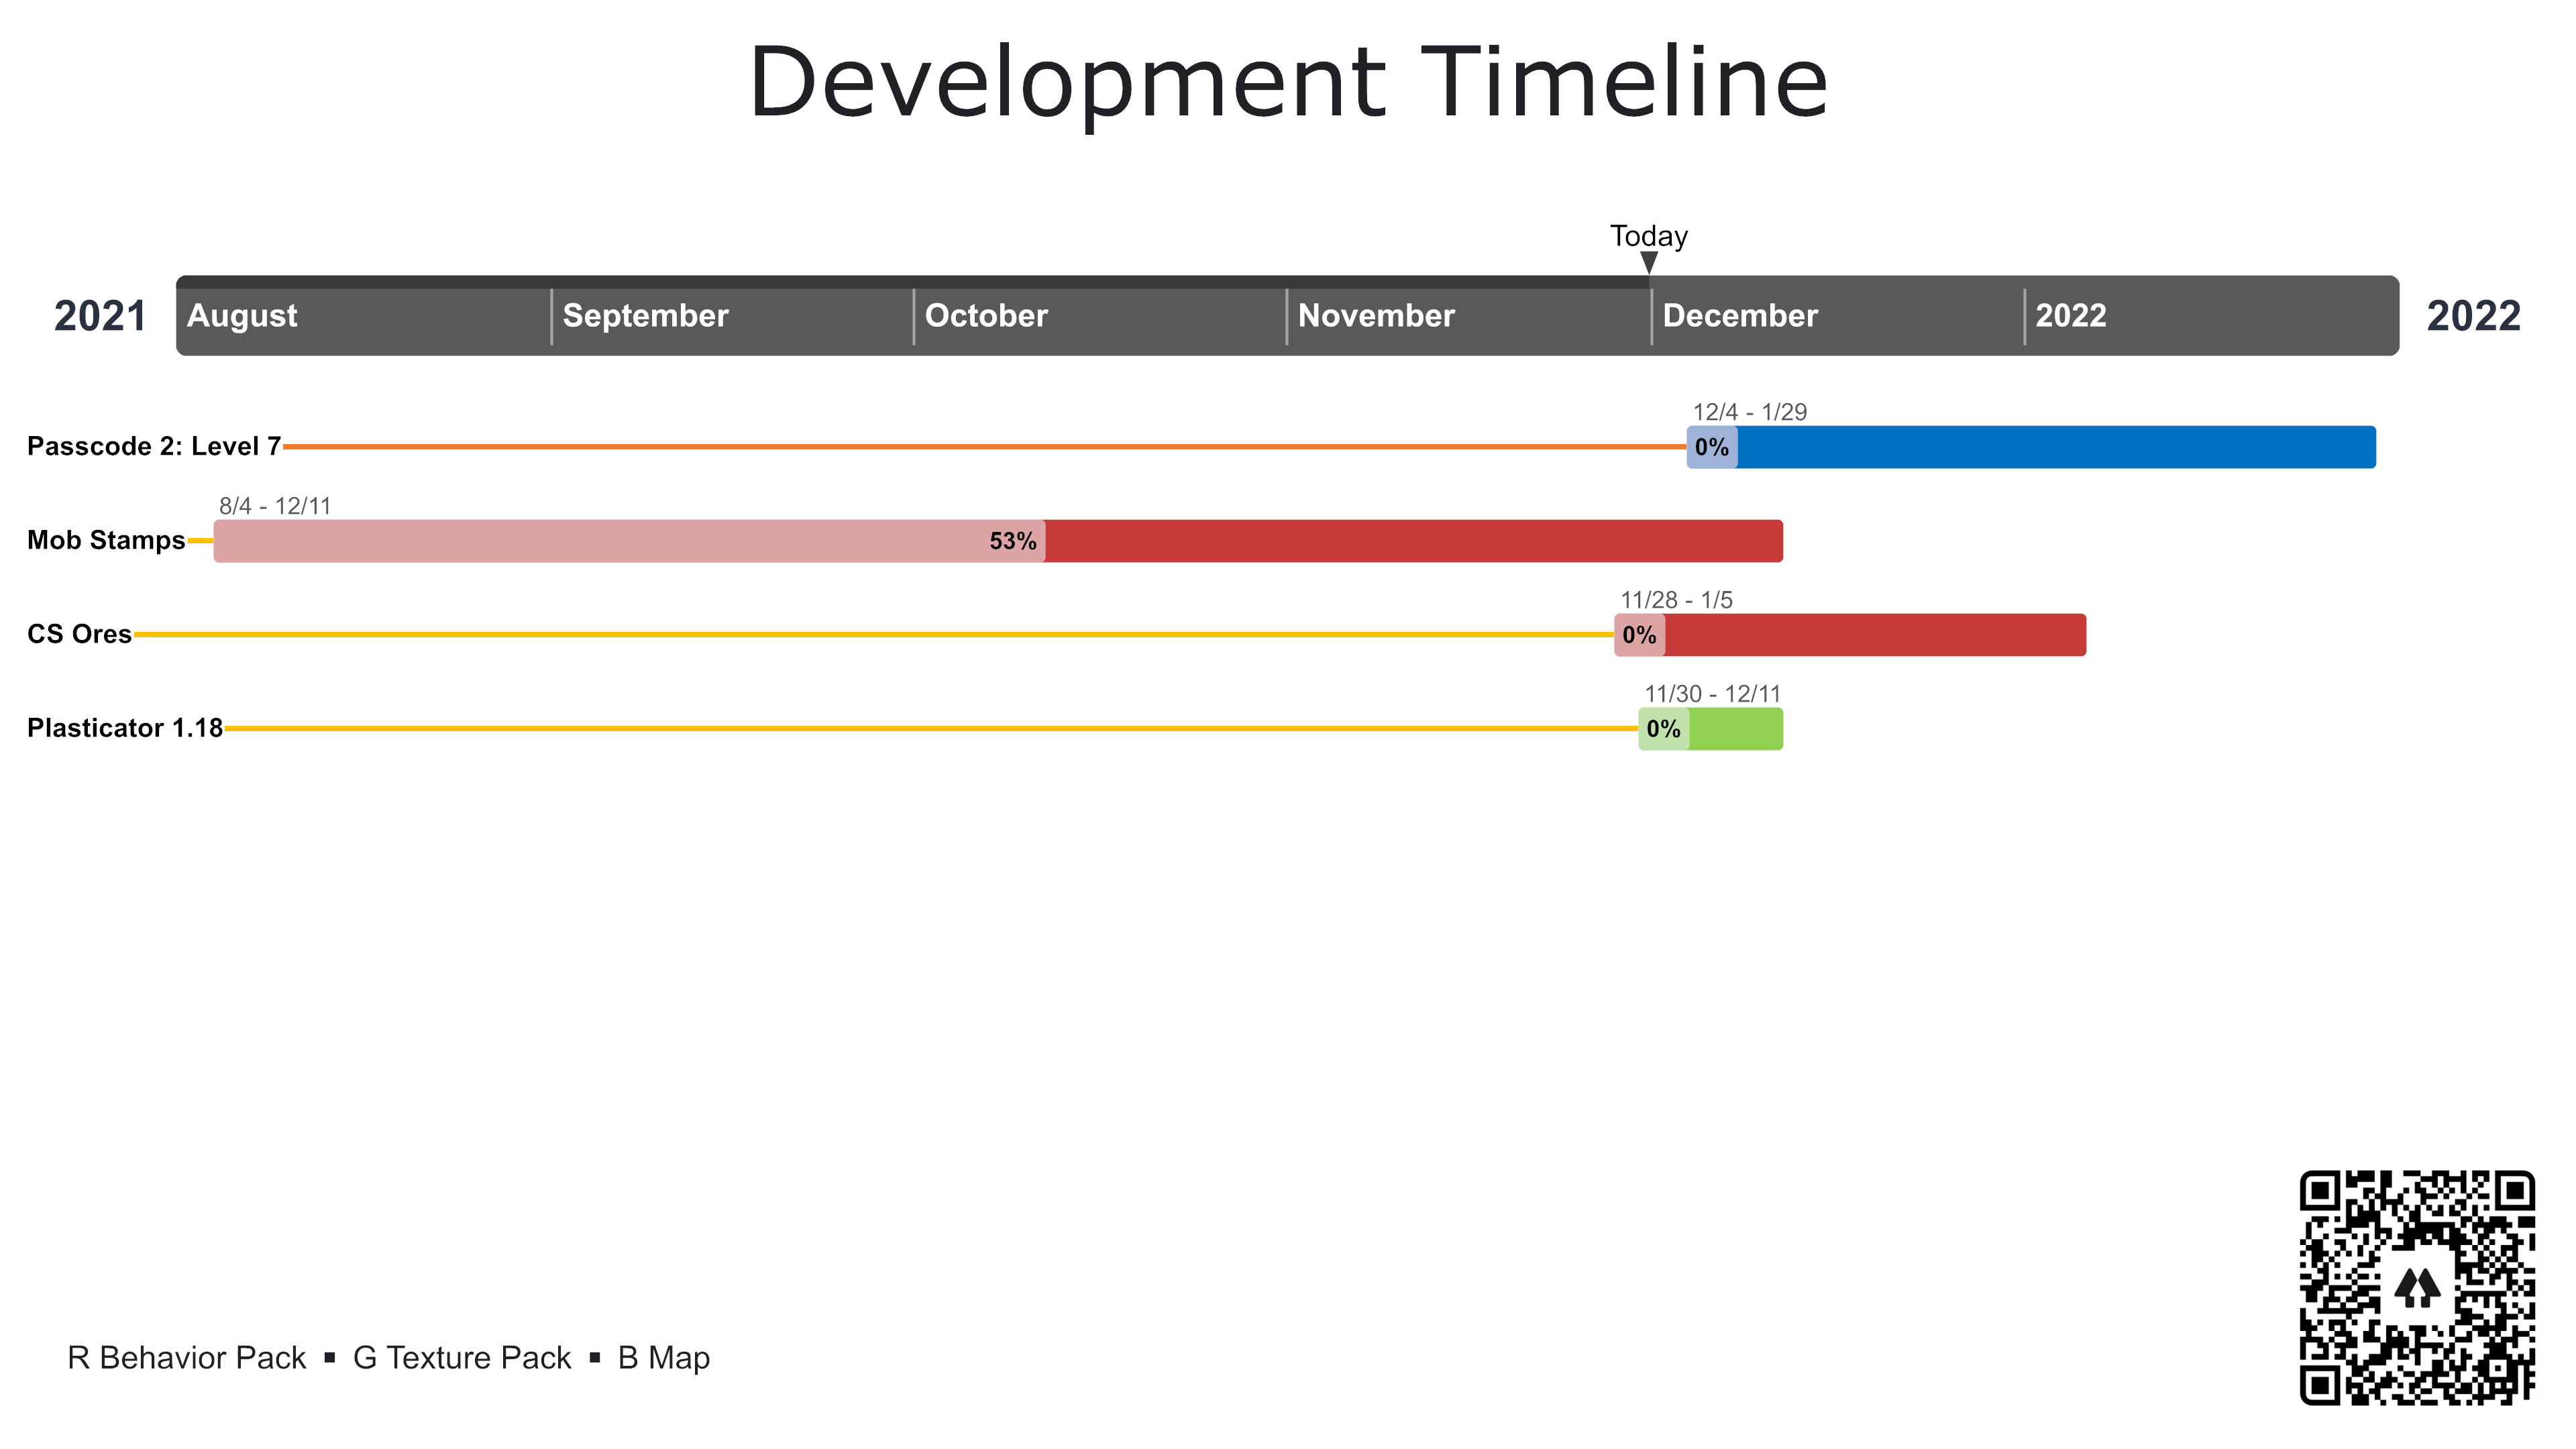 Development Timeline